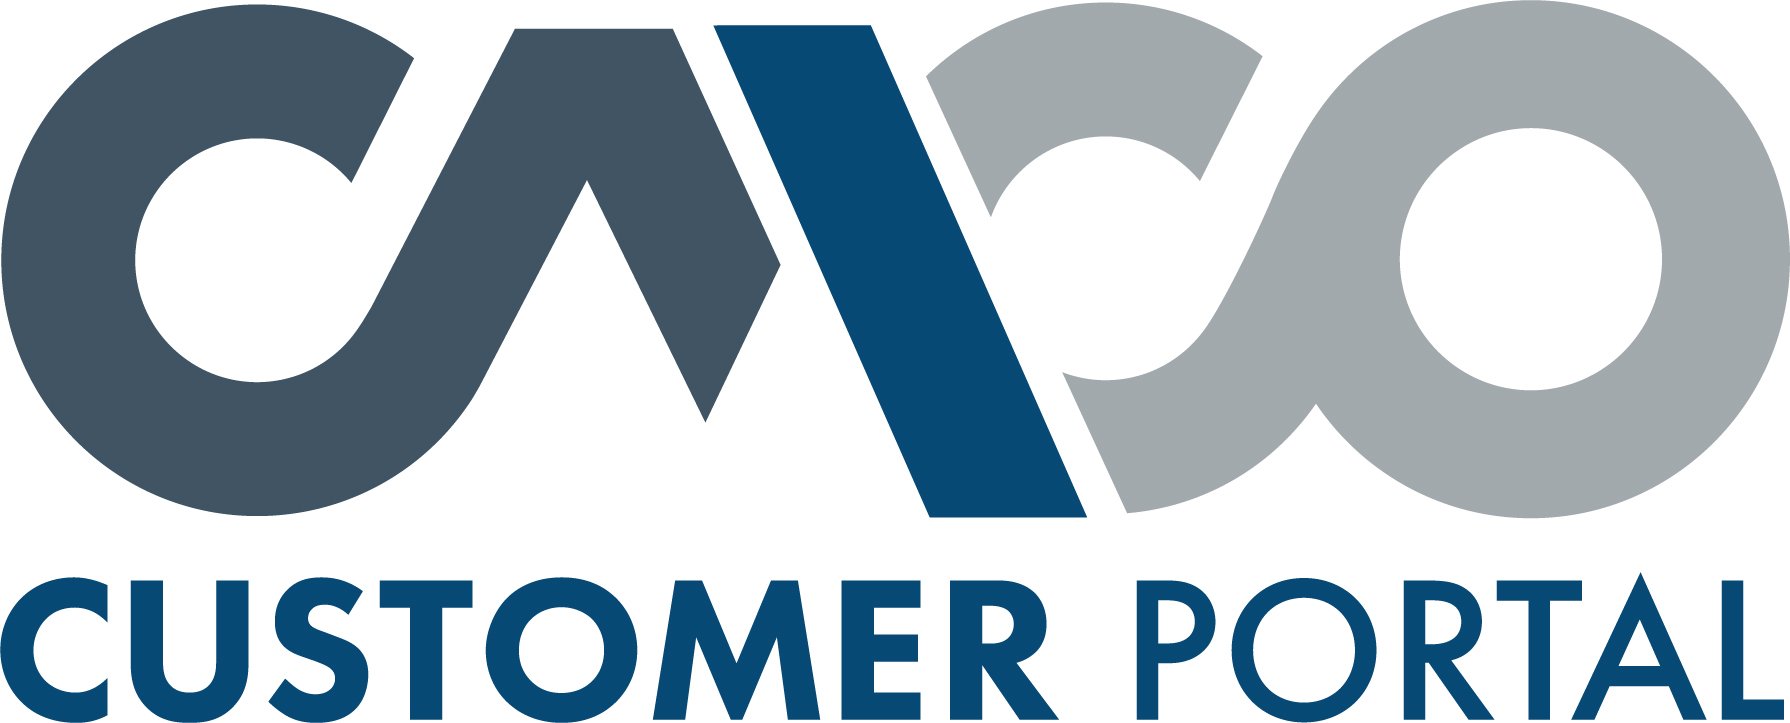 CMCO Customer Portal Logo 3c.jpg